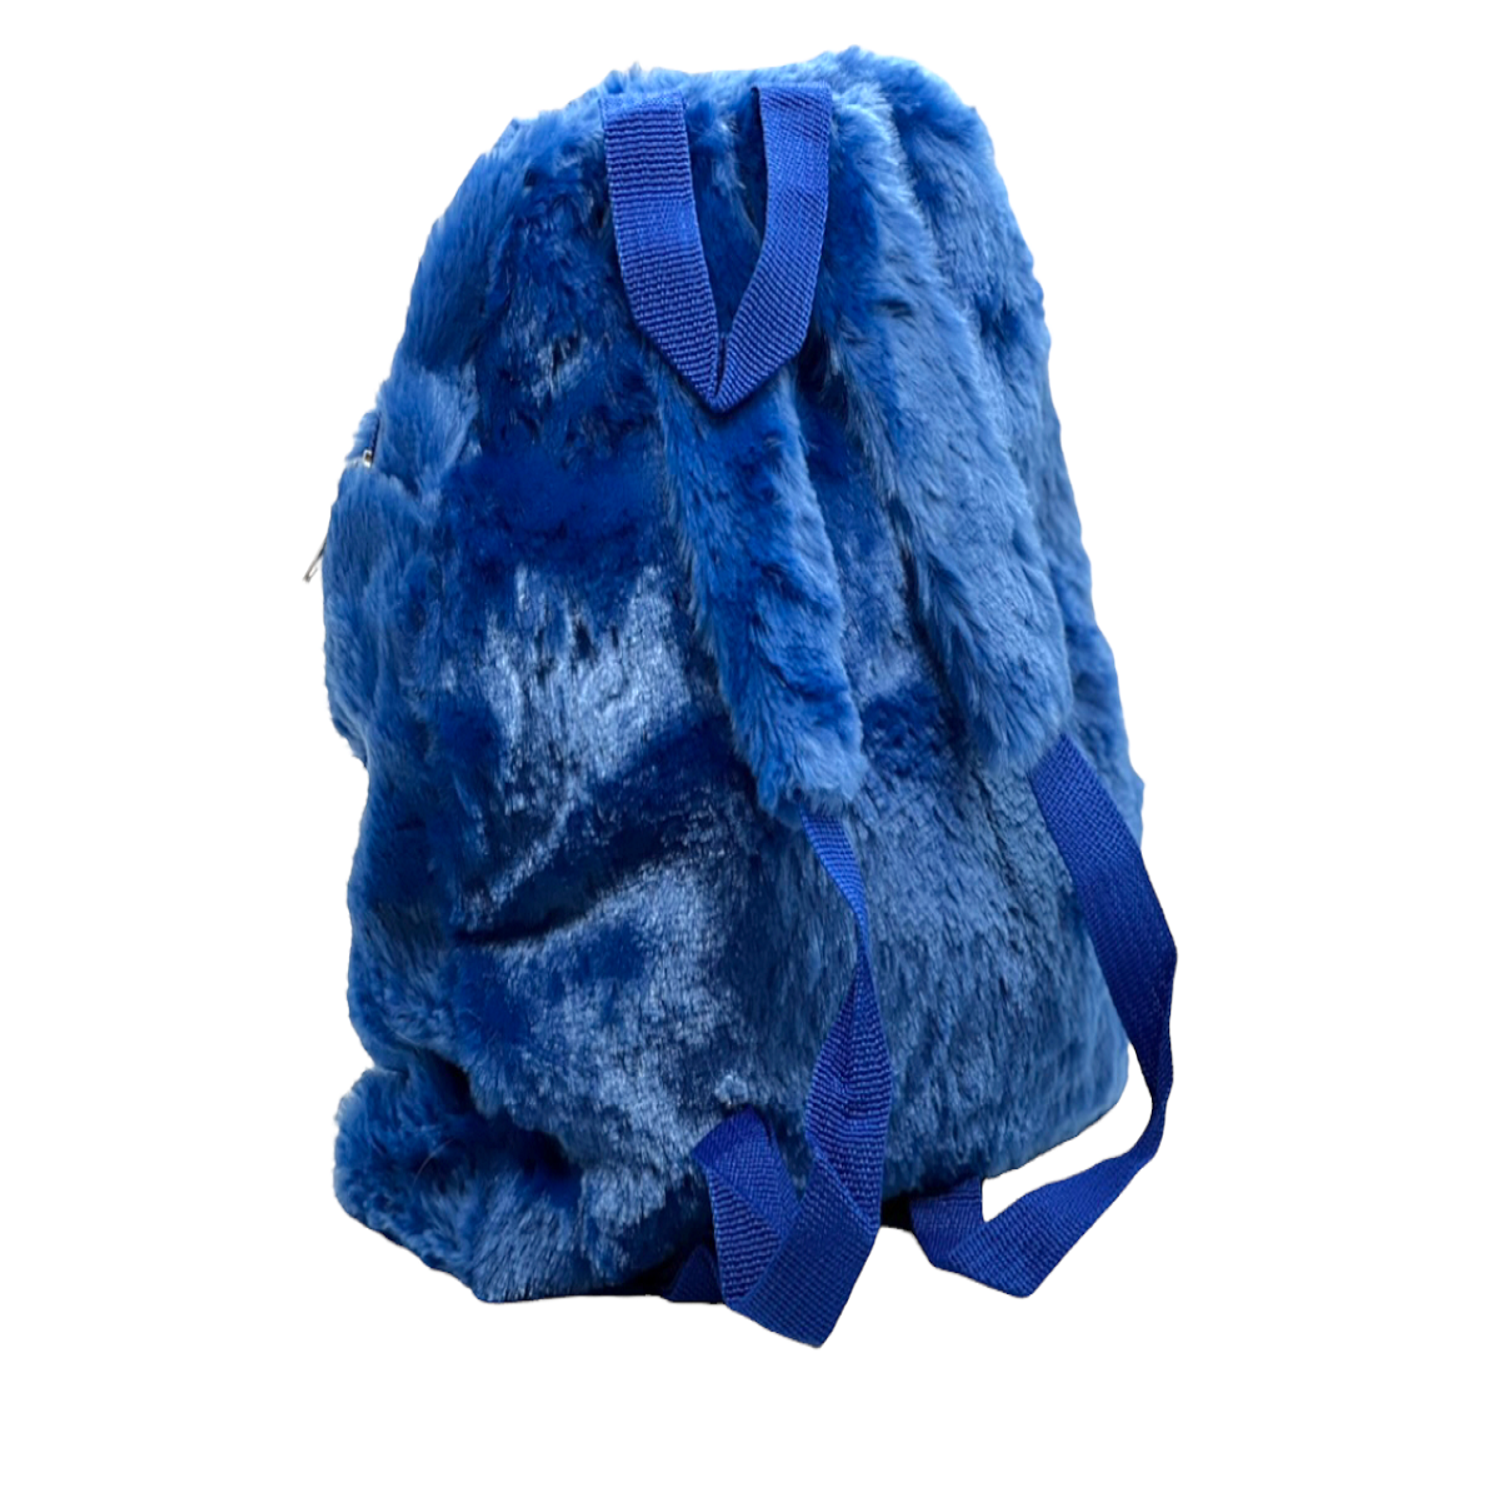 Мягкая игрушка Panawealth International Хаги Ваги рюкзак синий - фото 2